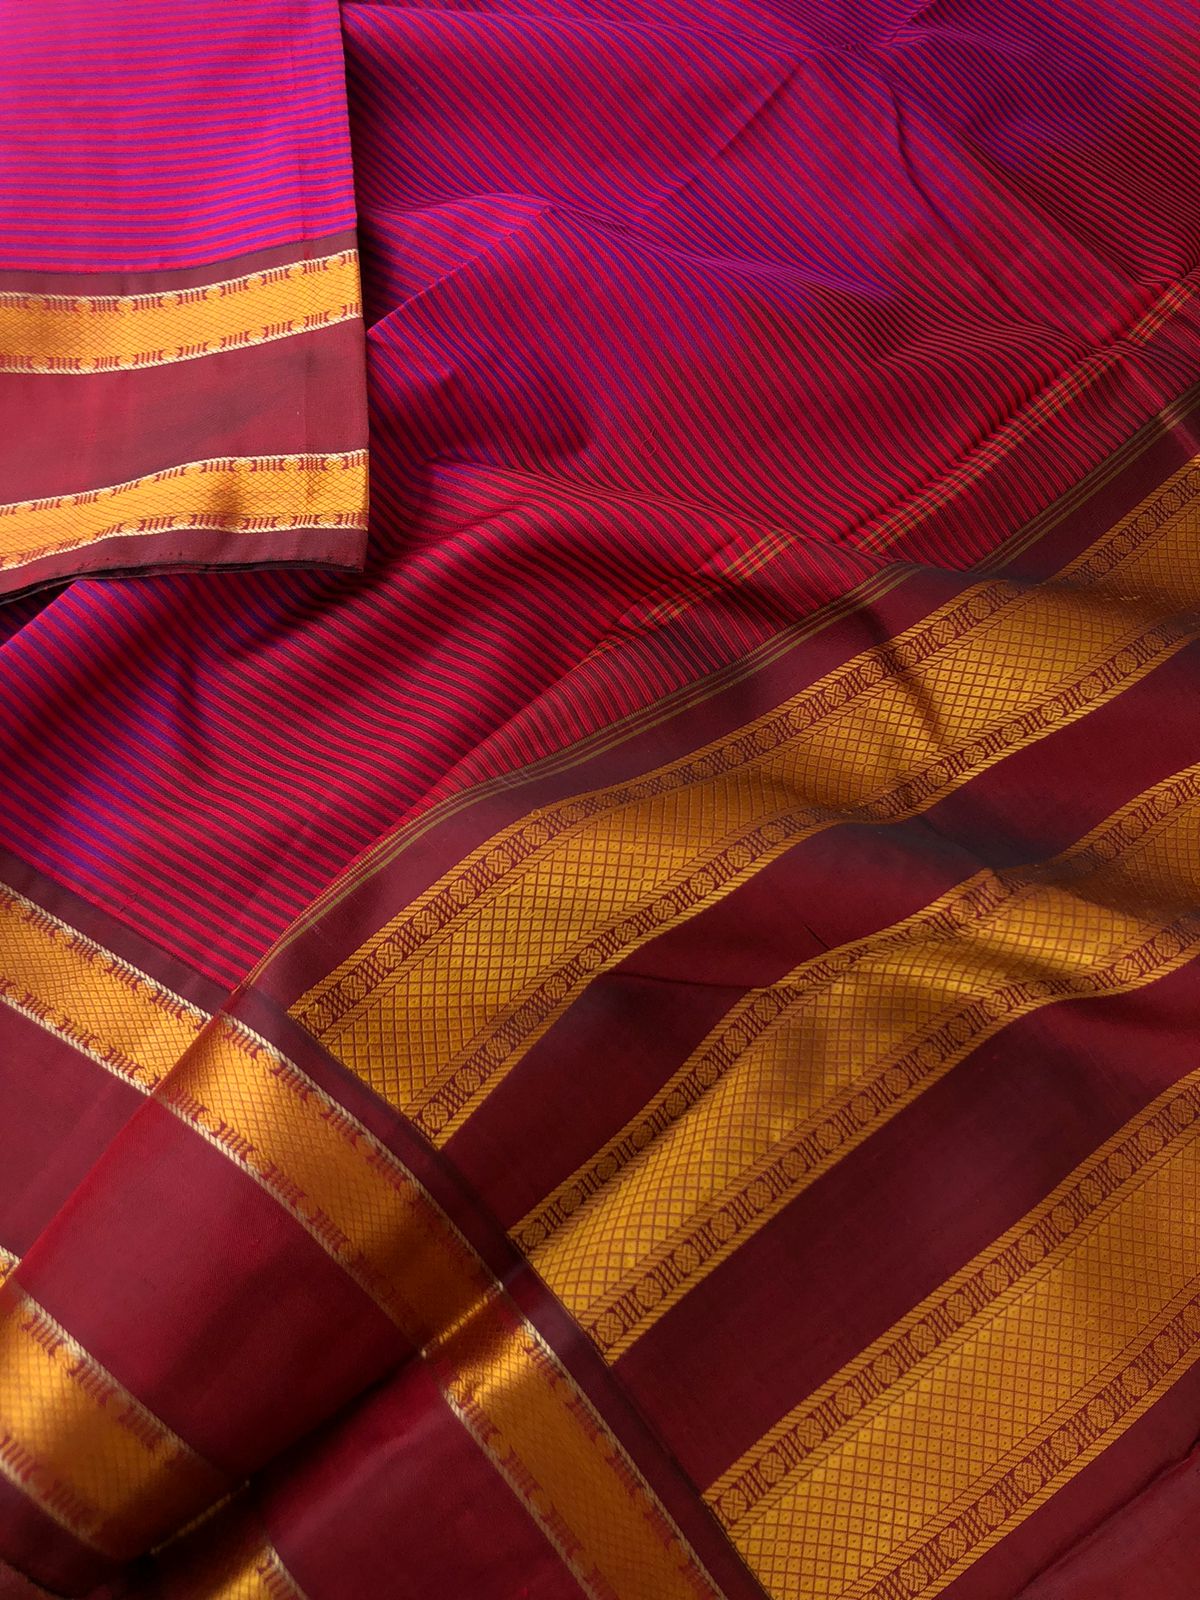 Kamakshi | Festive Vibes on Kanchivaram - the vintage revival classic light weight softer no zari Kanchivaram in deepest majenta and maroon with retta pett woven borders